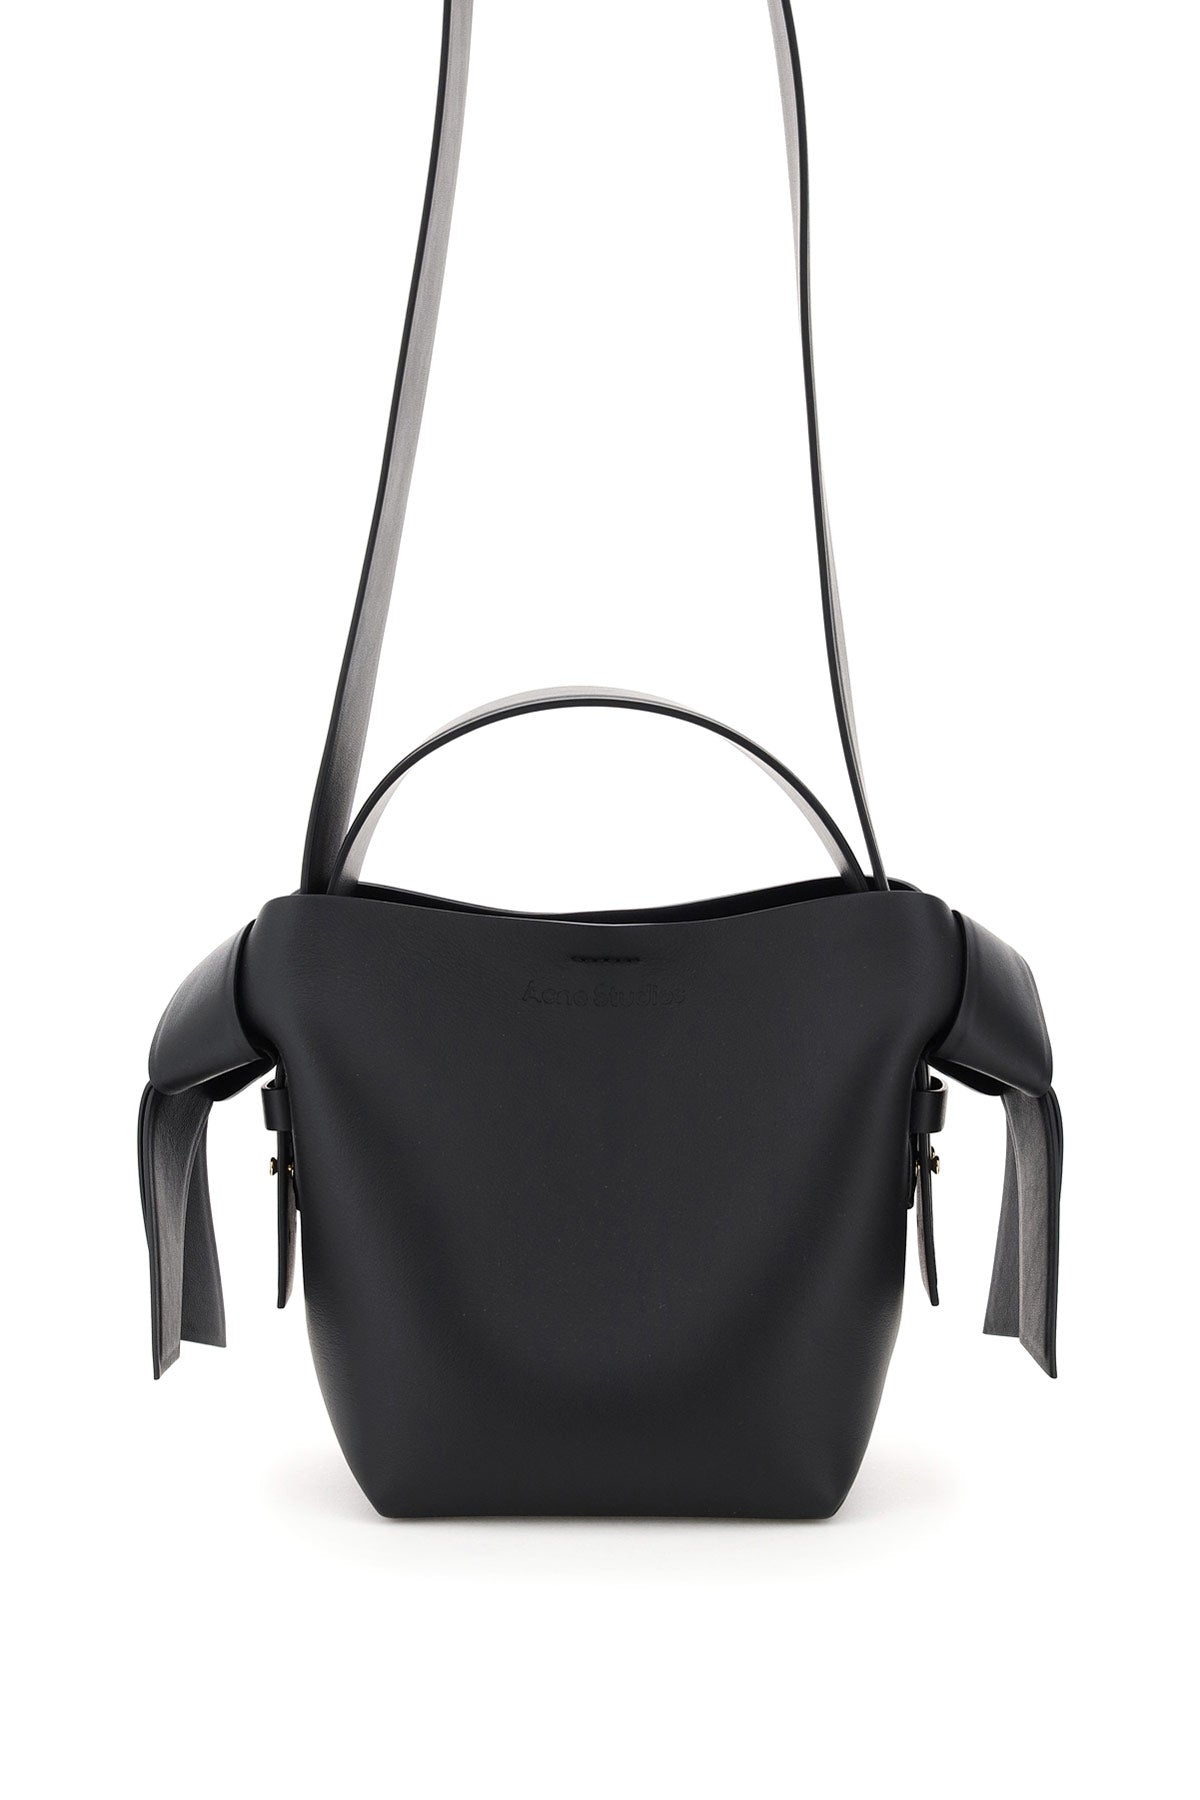 ACNE STUDIOS Black Mini Musubi Handbag for Women